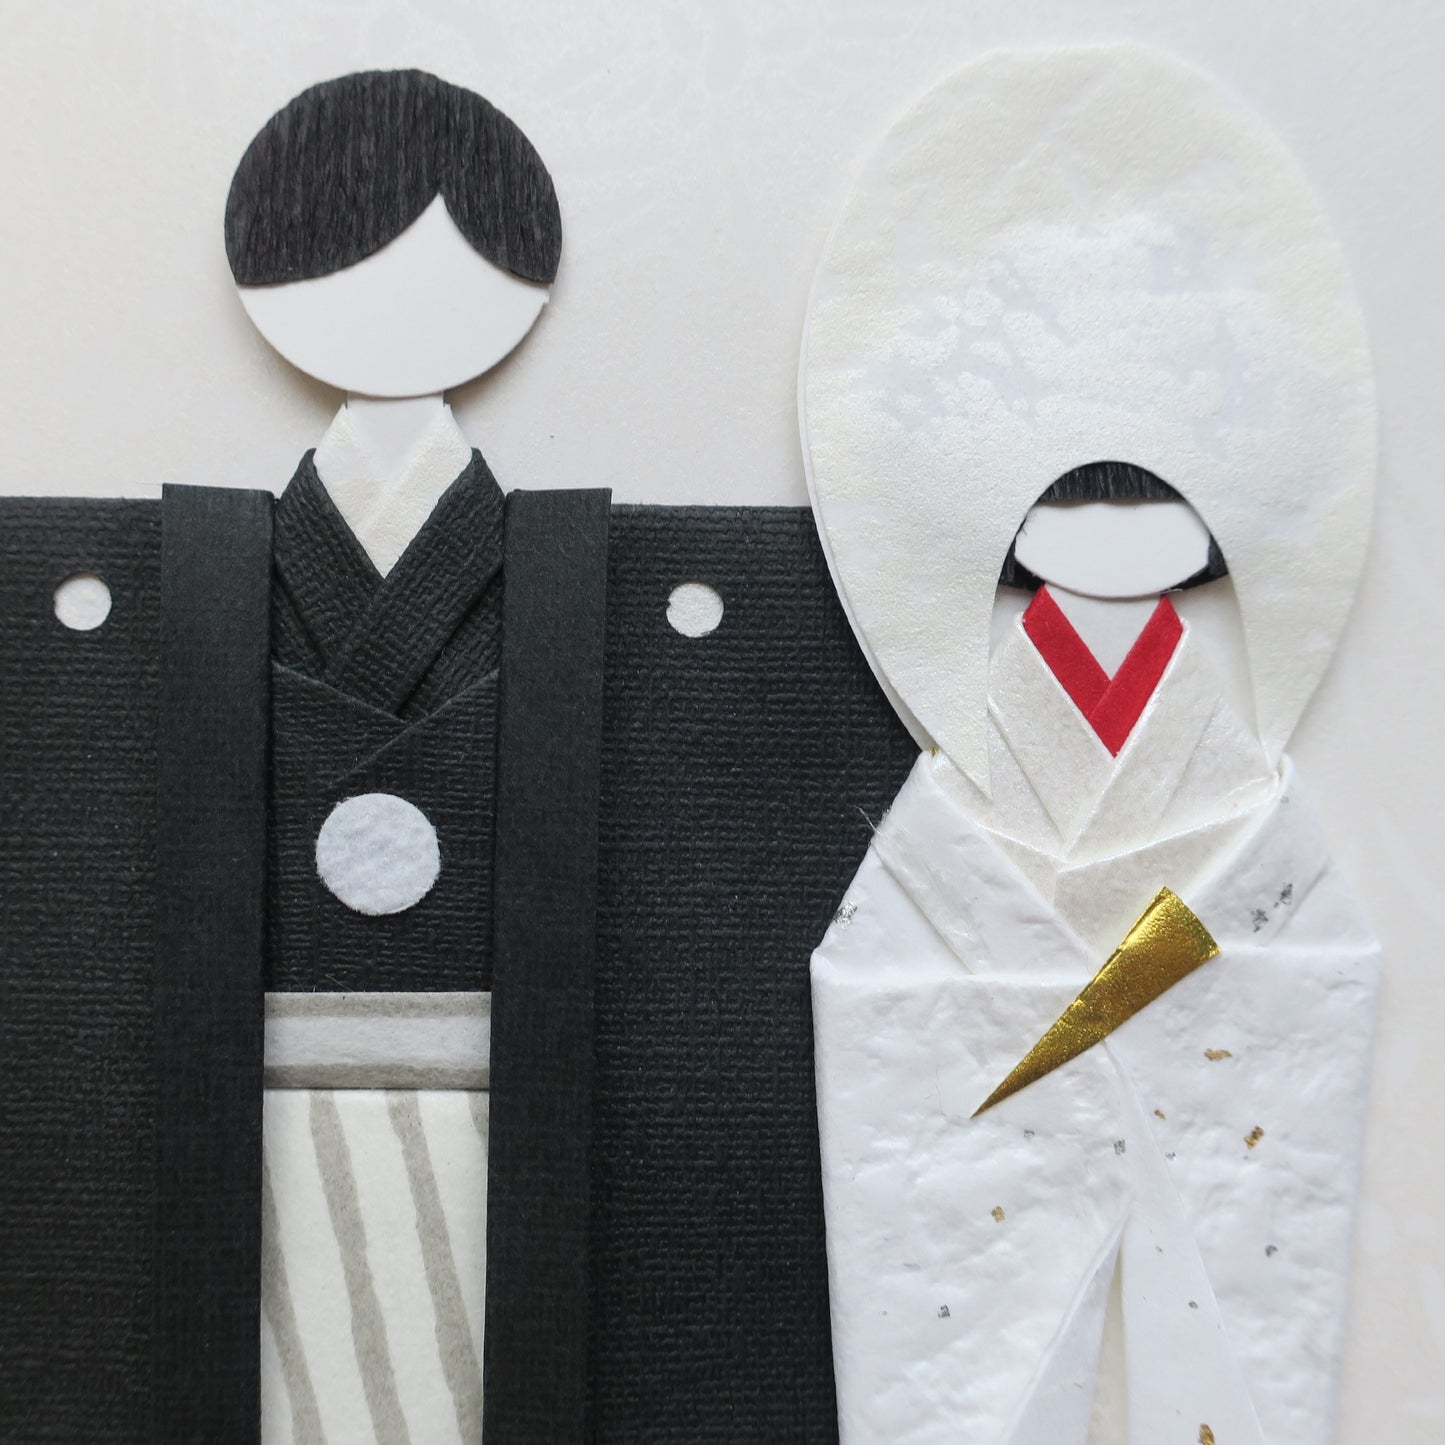 Handmade Origami Kimono Doll Wedding  Card - B